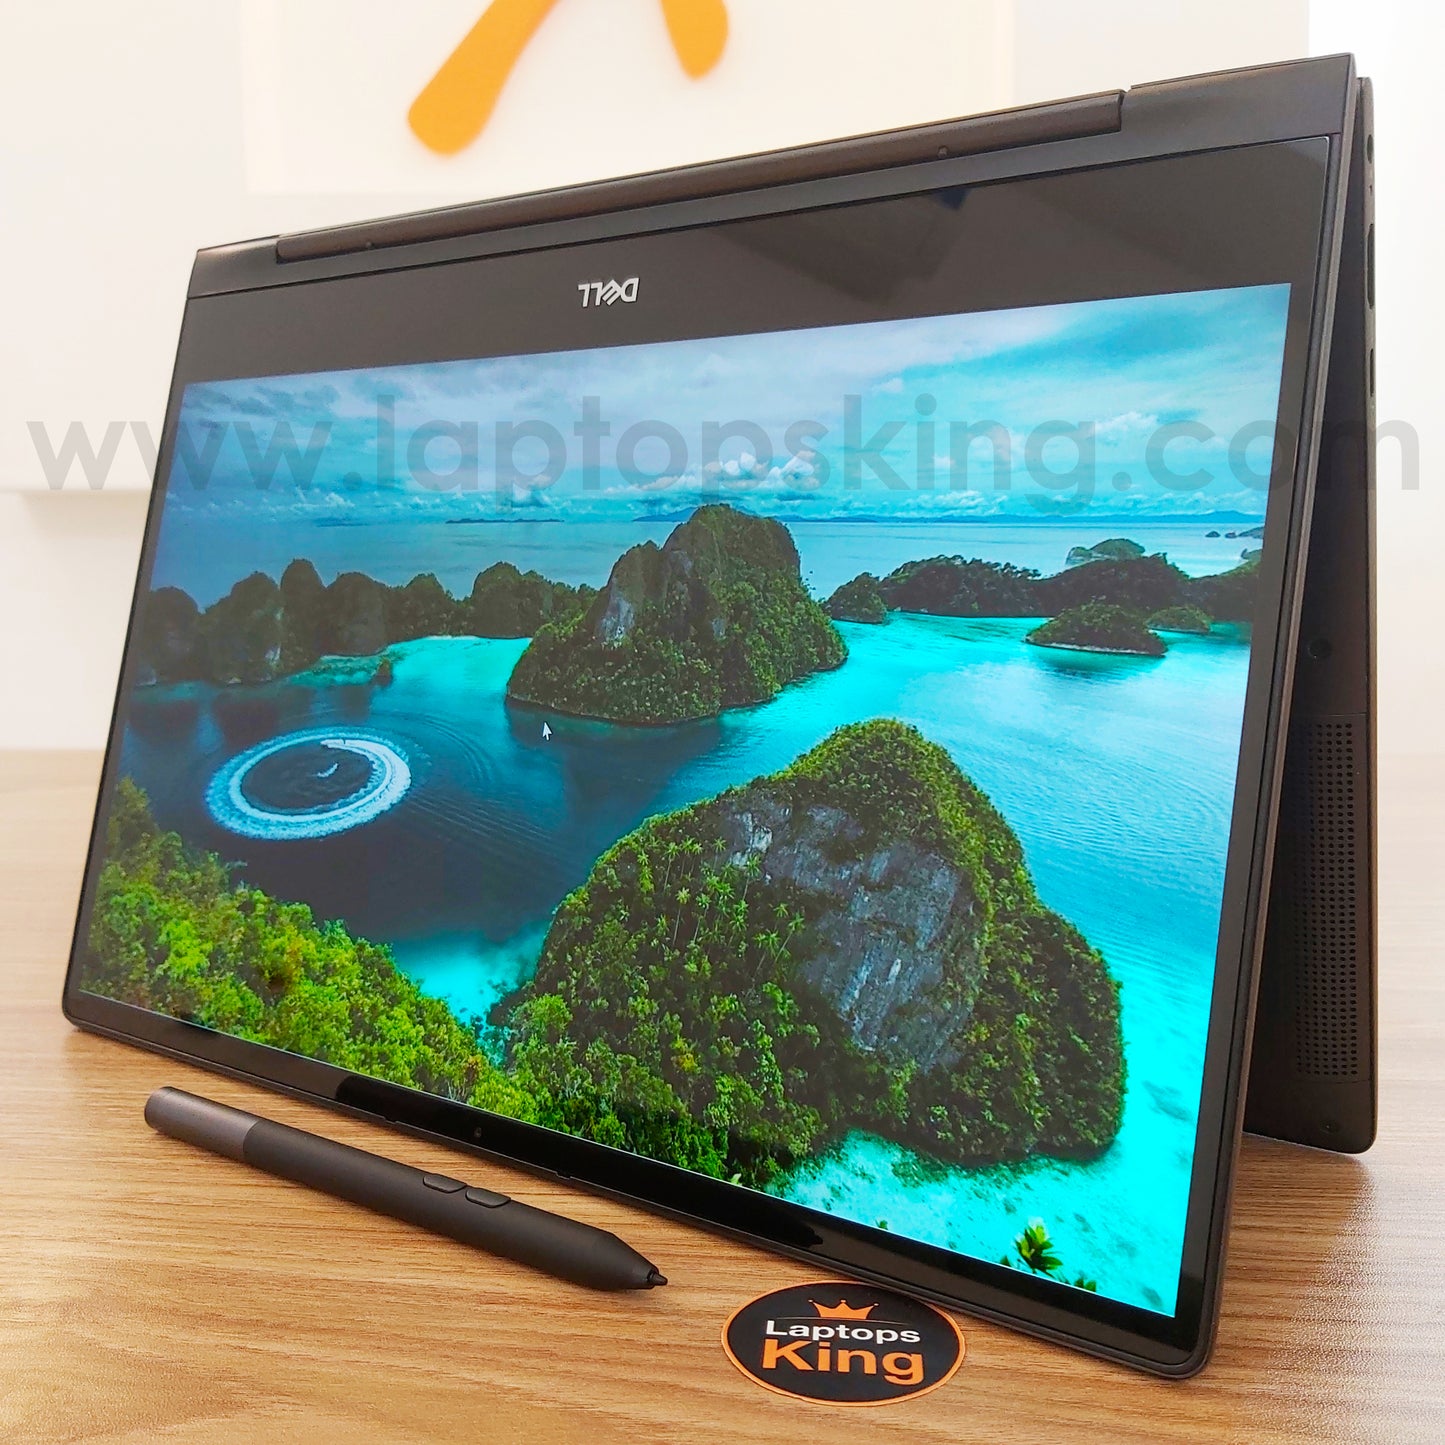 Dell Inspiron 7390 i7-8565U 4K Flip-Touchscreen 2in1 Laptop (Open Box)